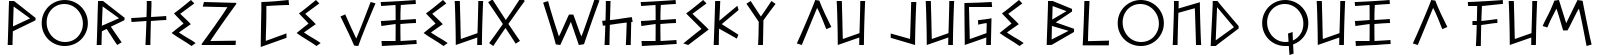 Пример написания шрифтом Alfabetix текста на французском